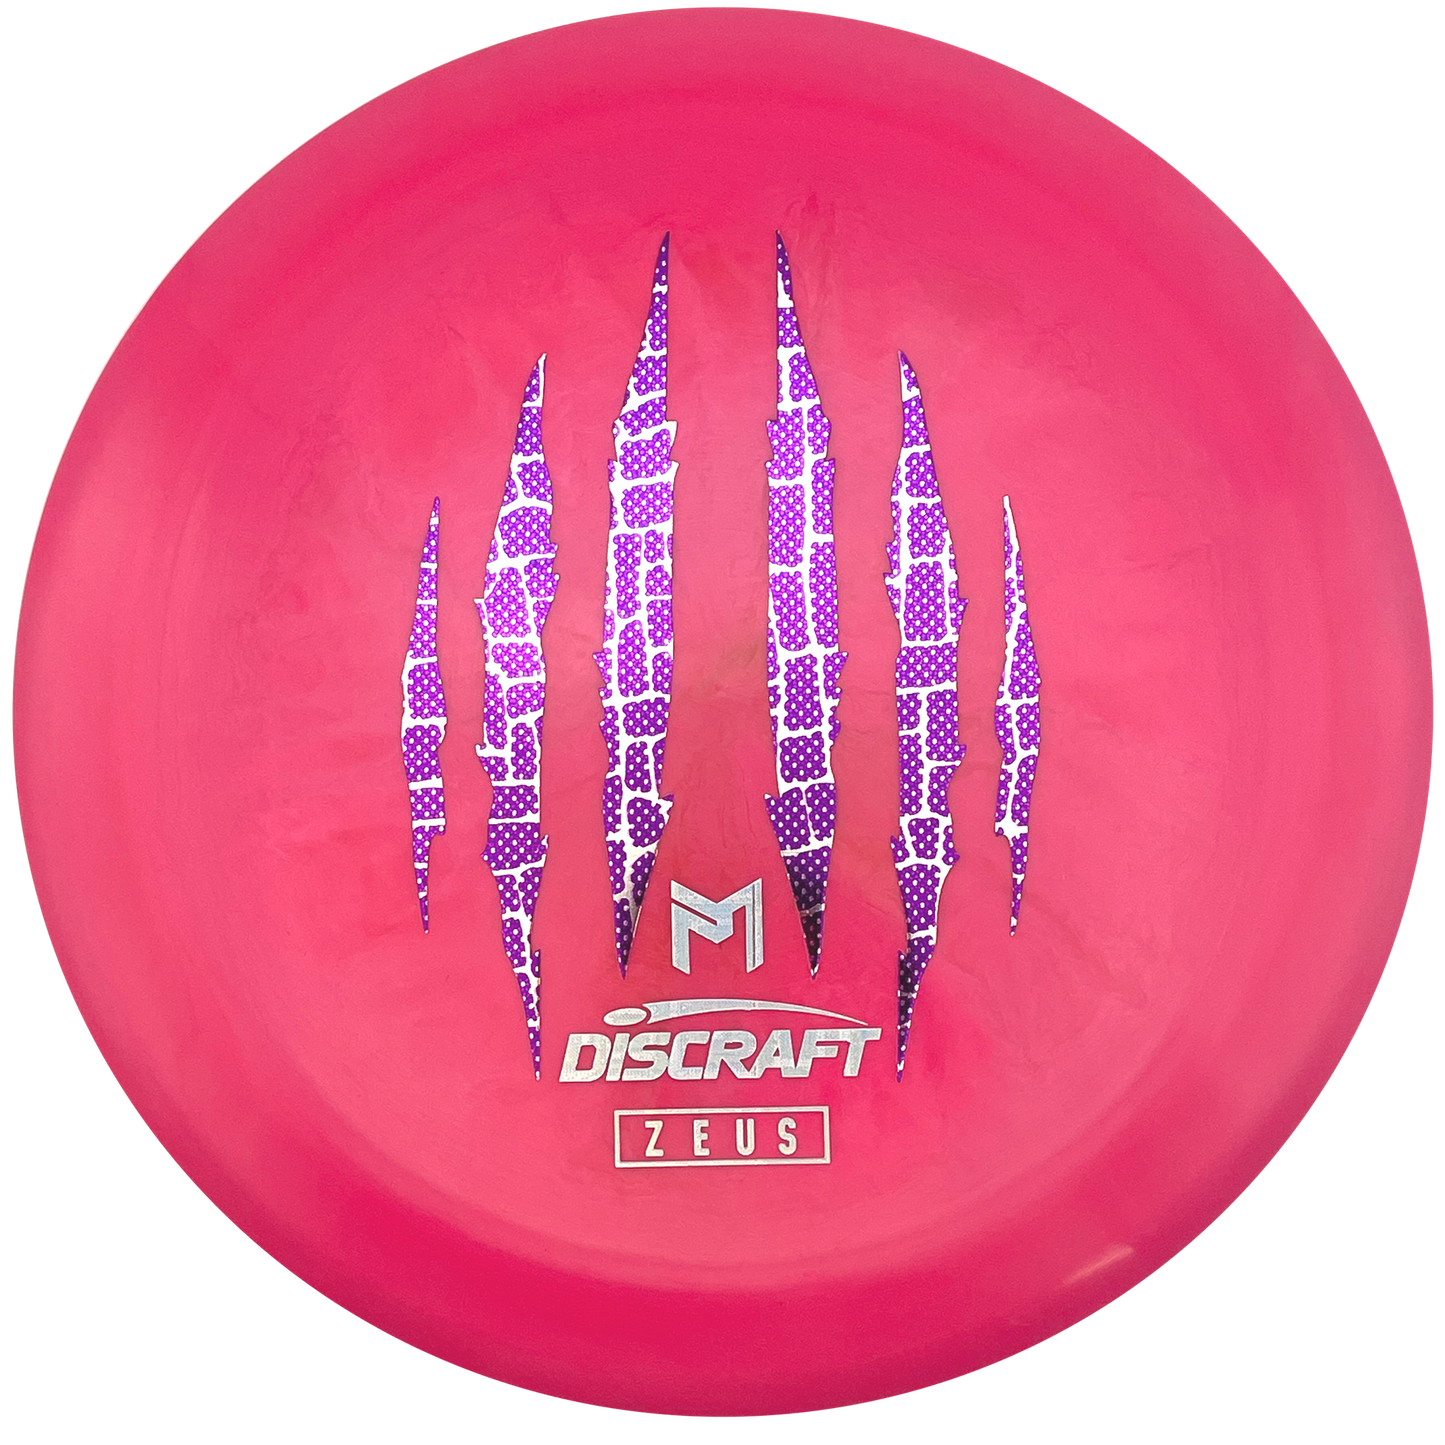 Discraft Zeus - 6x Paul McBeth - ESP - Swirly Pink